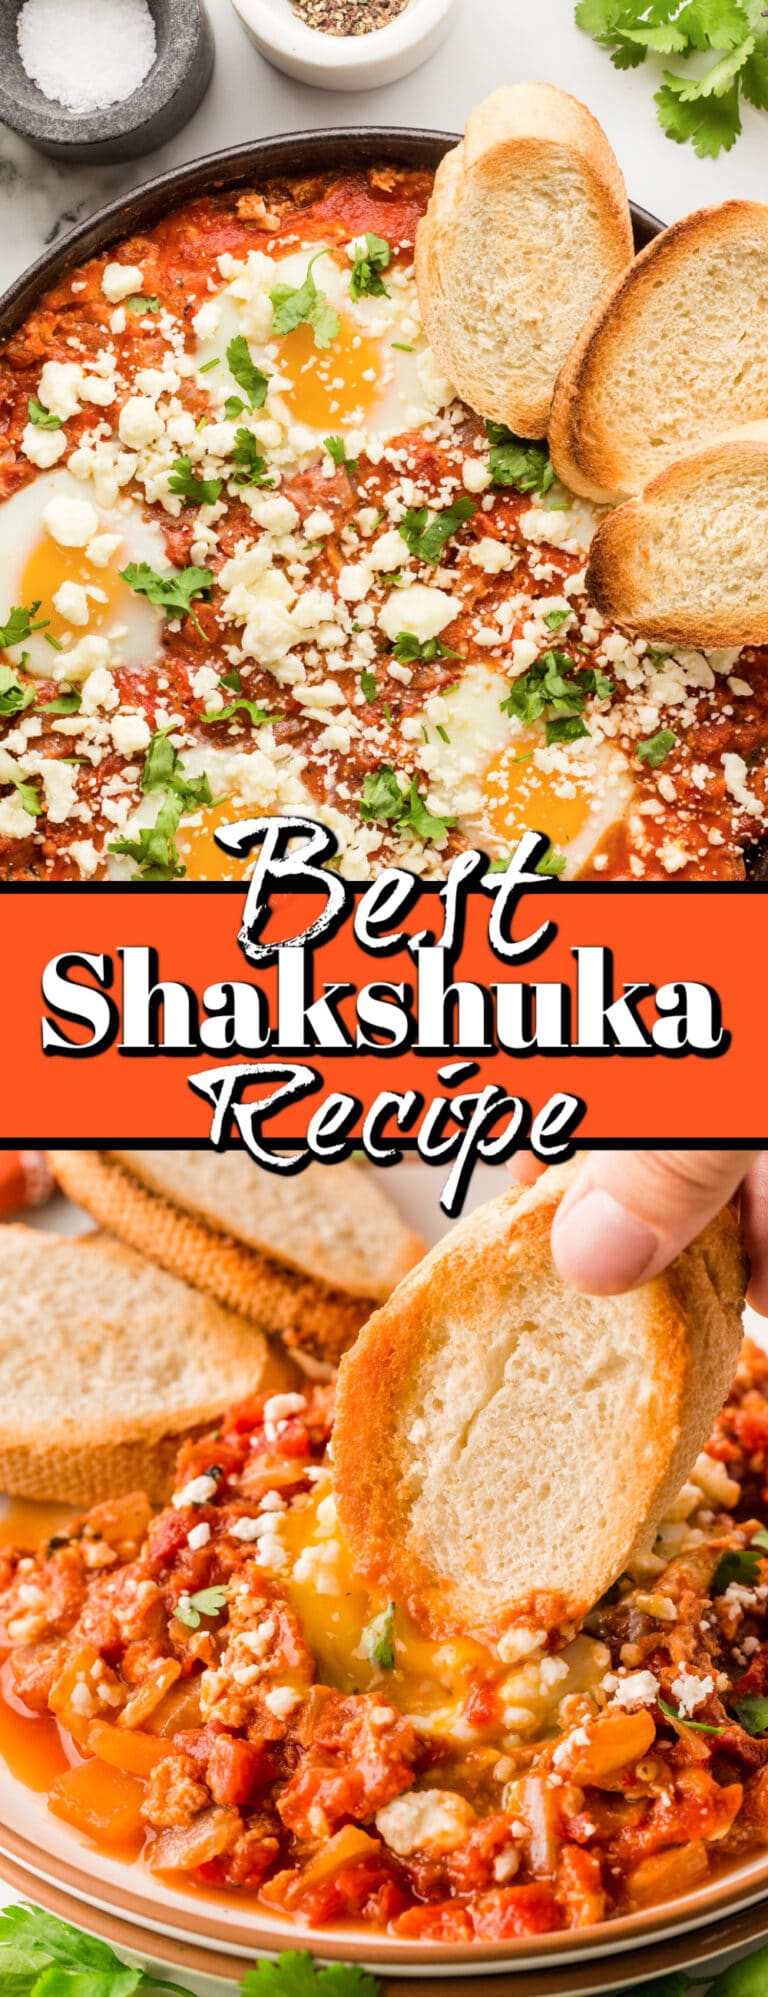 Best Shakshuka Recipe - Noshing With The Nolands